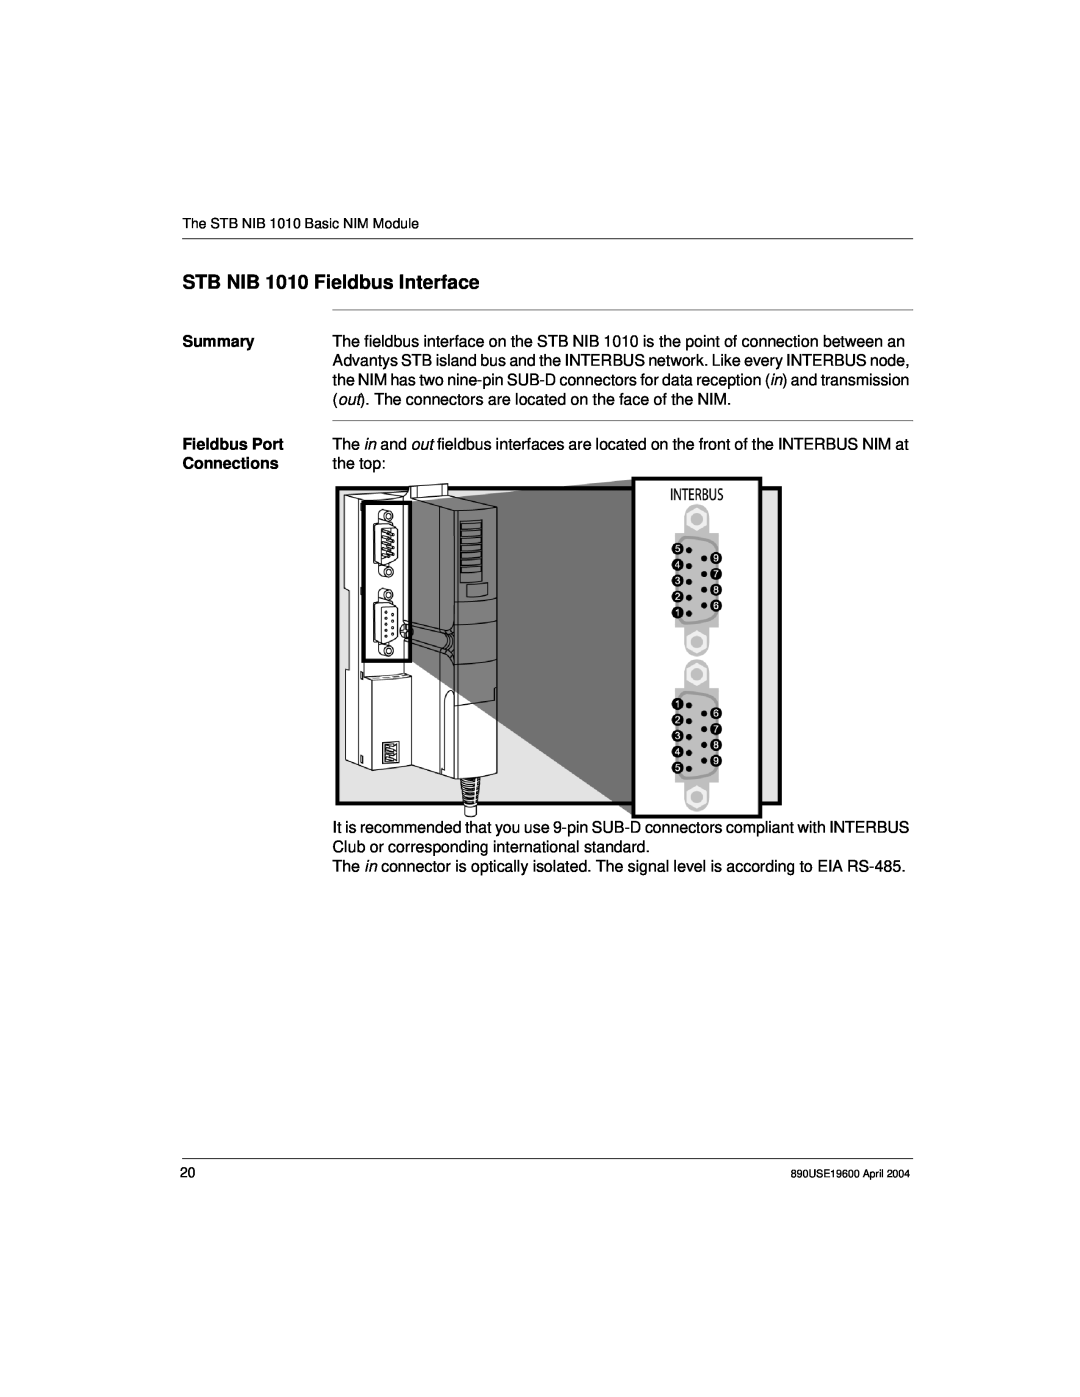 Schneider Electric 890USE19600 Version 1.0 manual STB NIB 1010 Fieldbus Interface, Summary, Fieldbus Port, Connections 